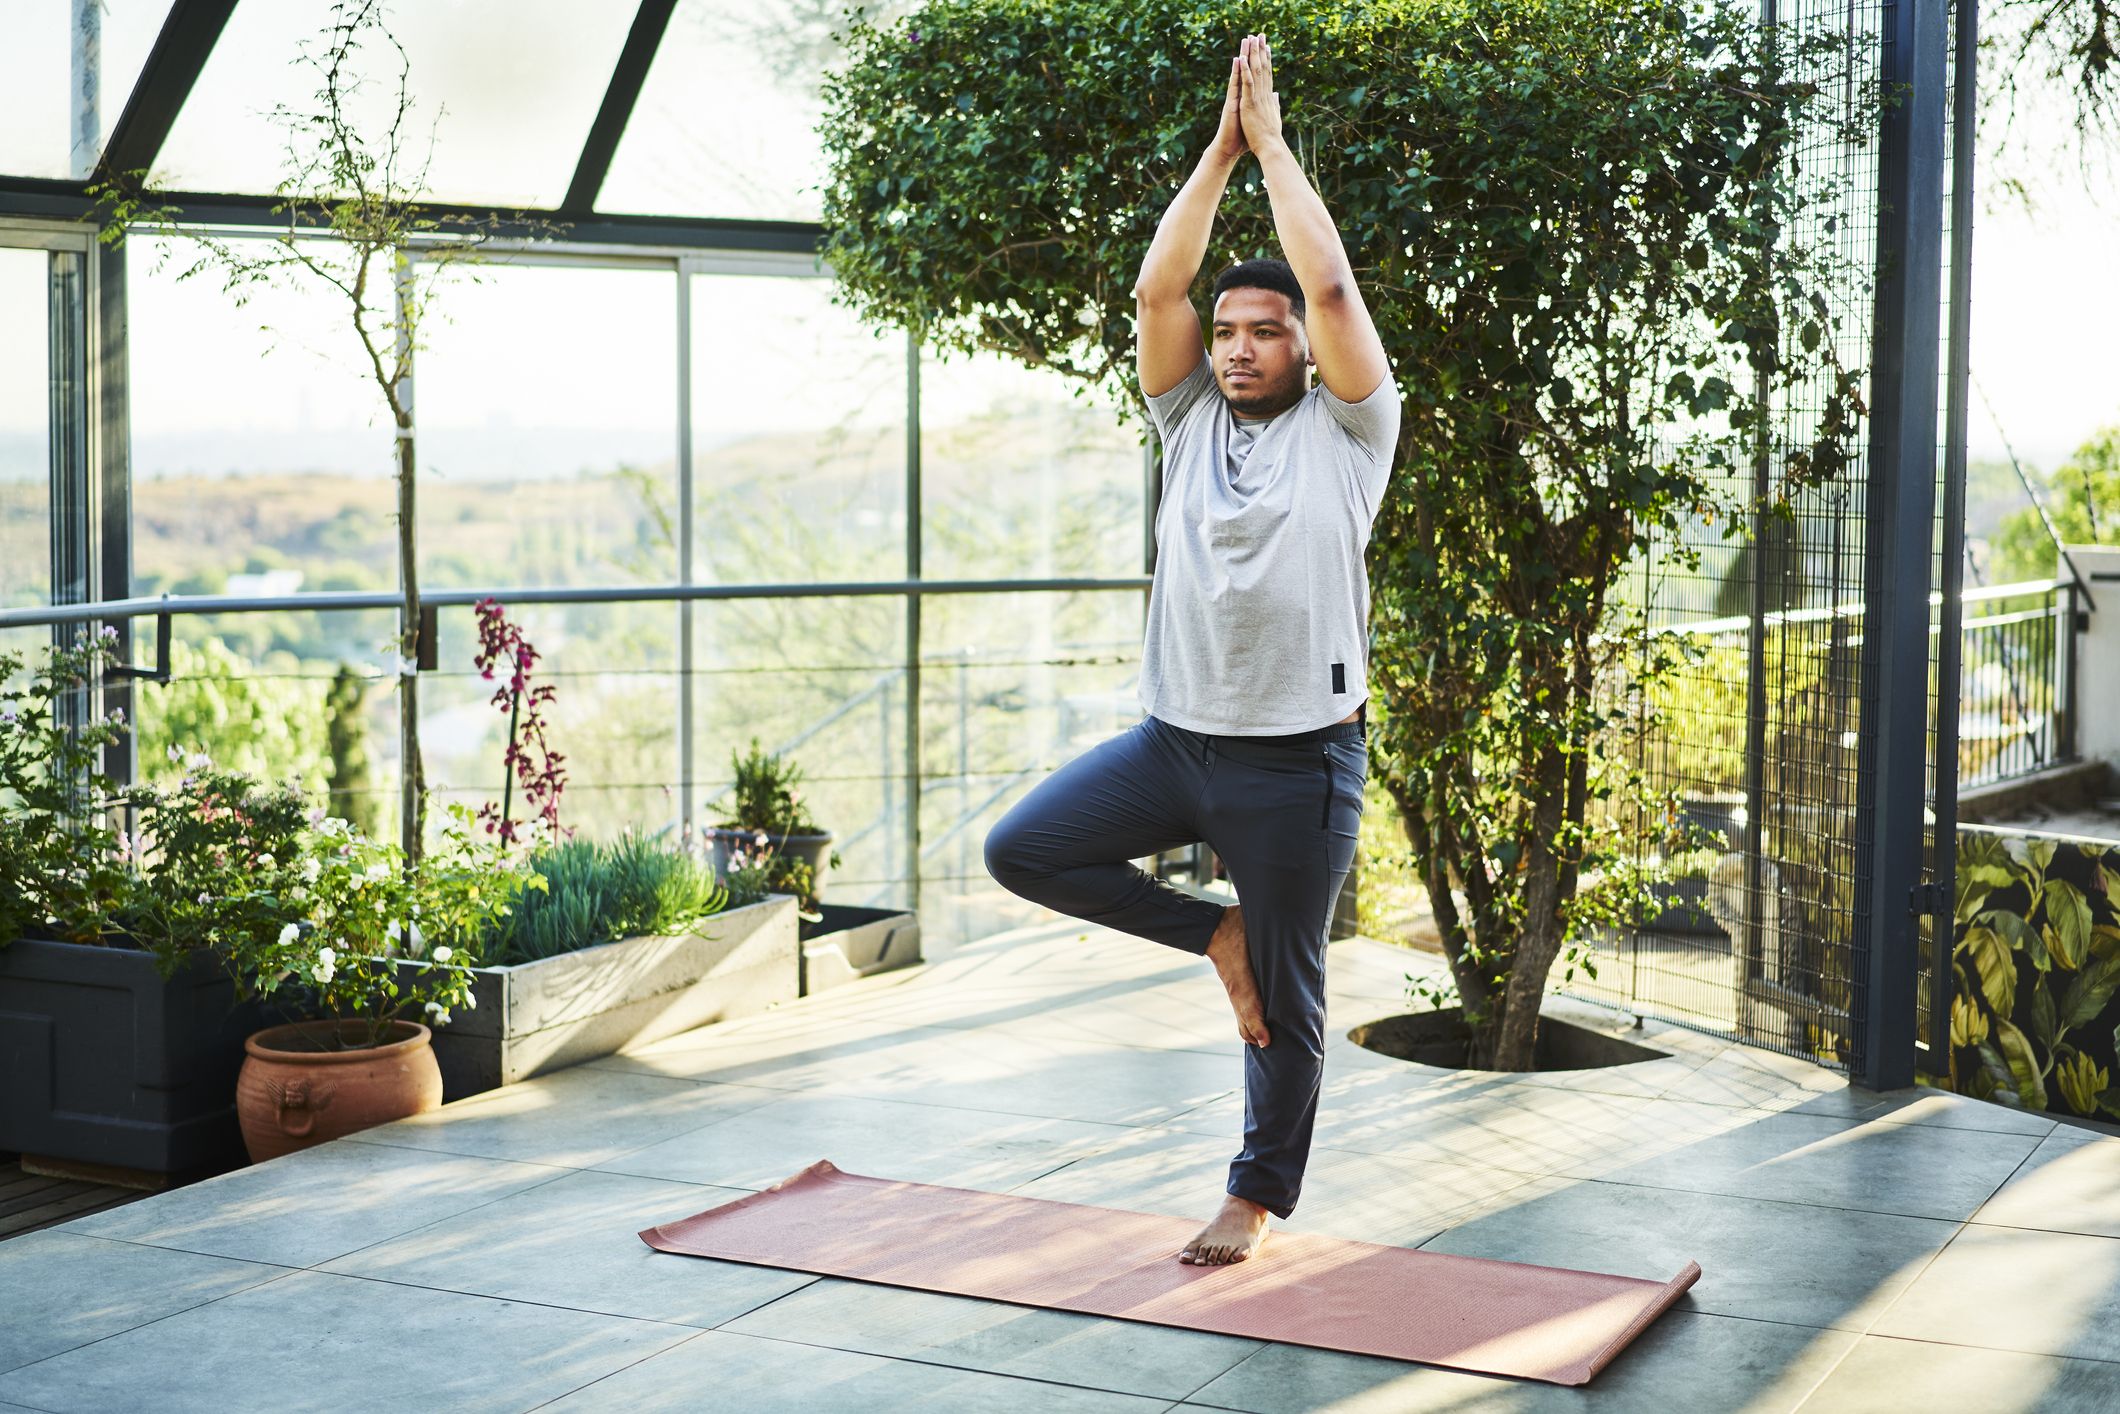 Yin Yoga Poses: 7 Yin Yoga Asanas For Beginners & Beyond | The Yogatique